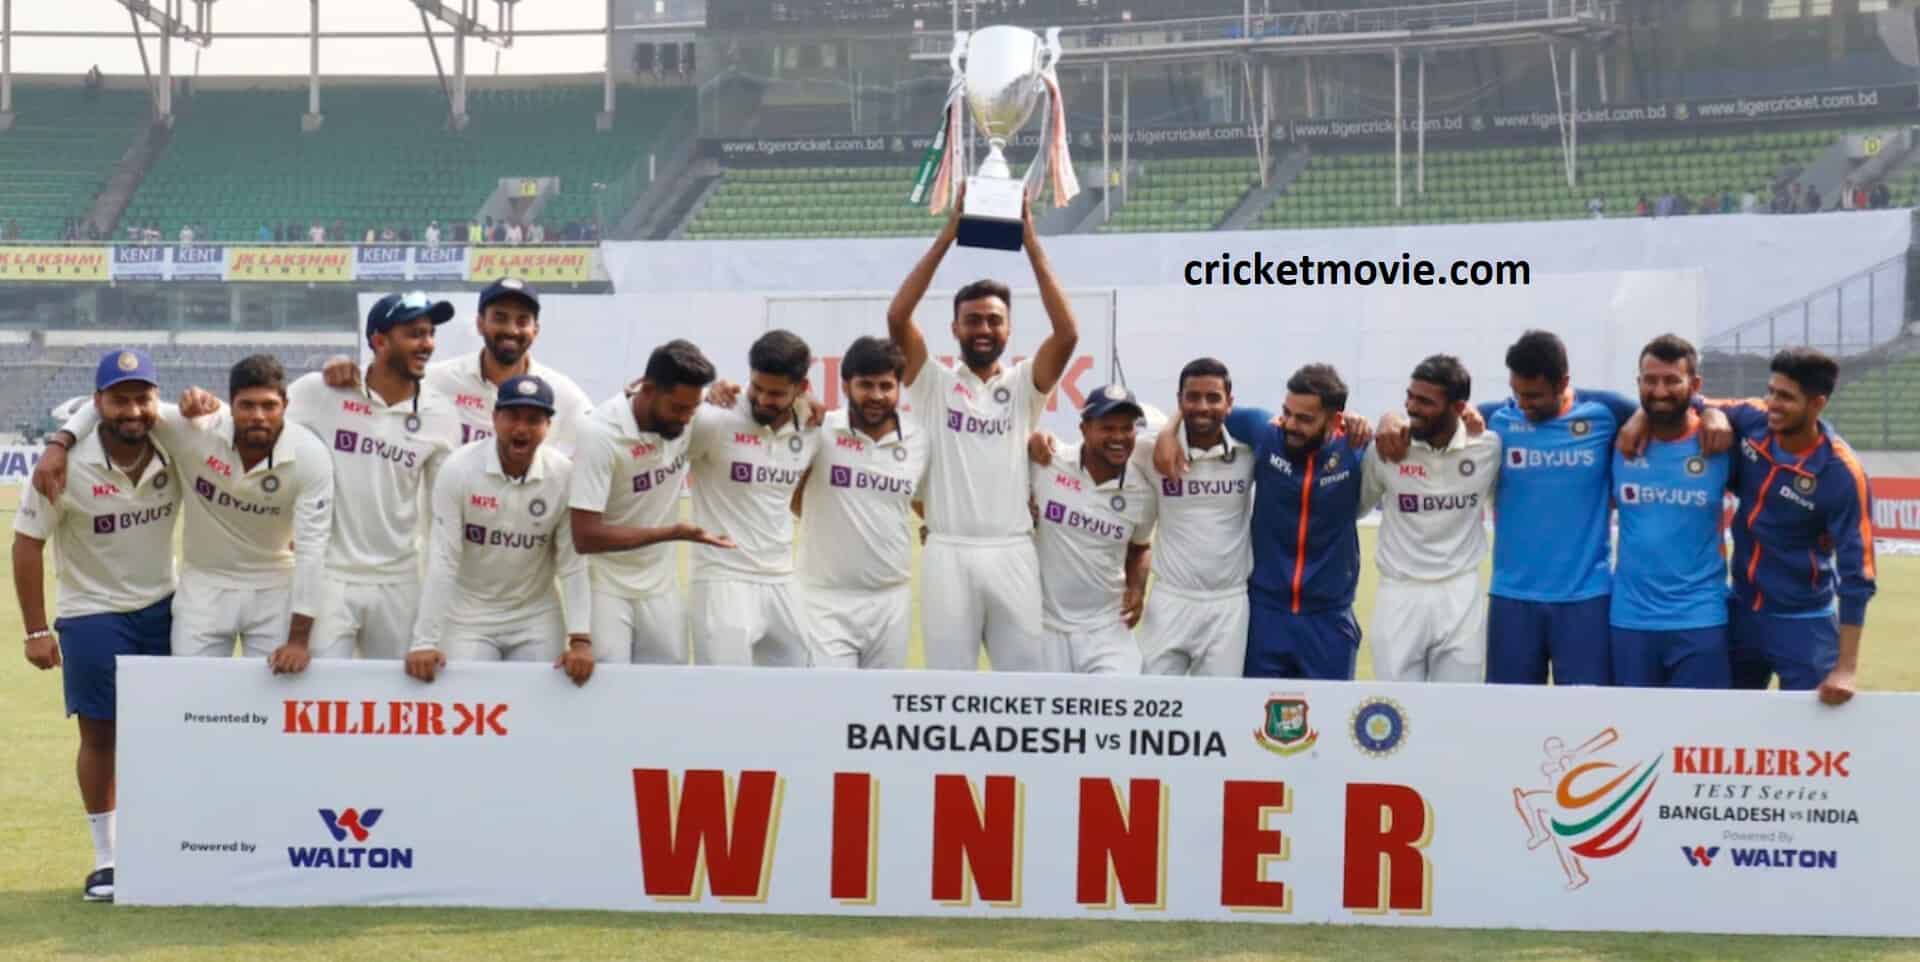 India whitewashed Bangladesh in Test Series-cricketmovie.com